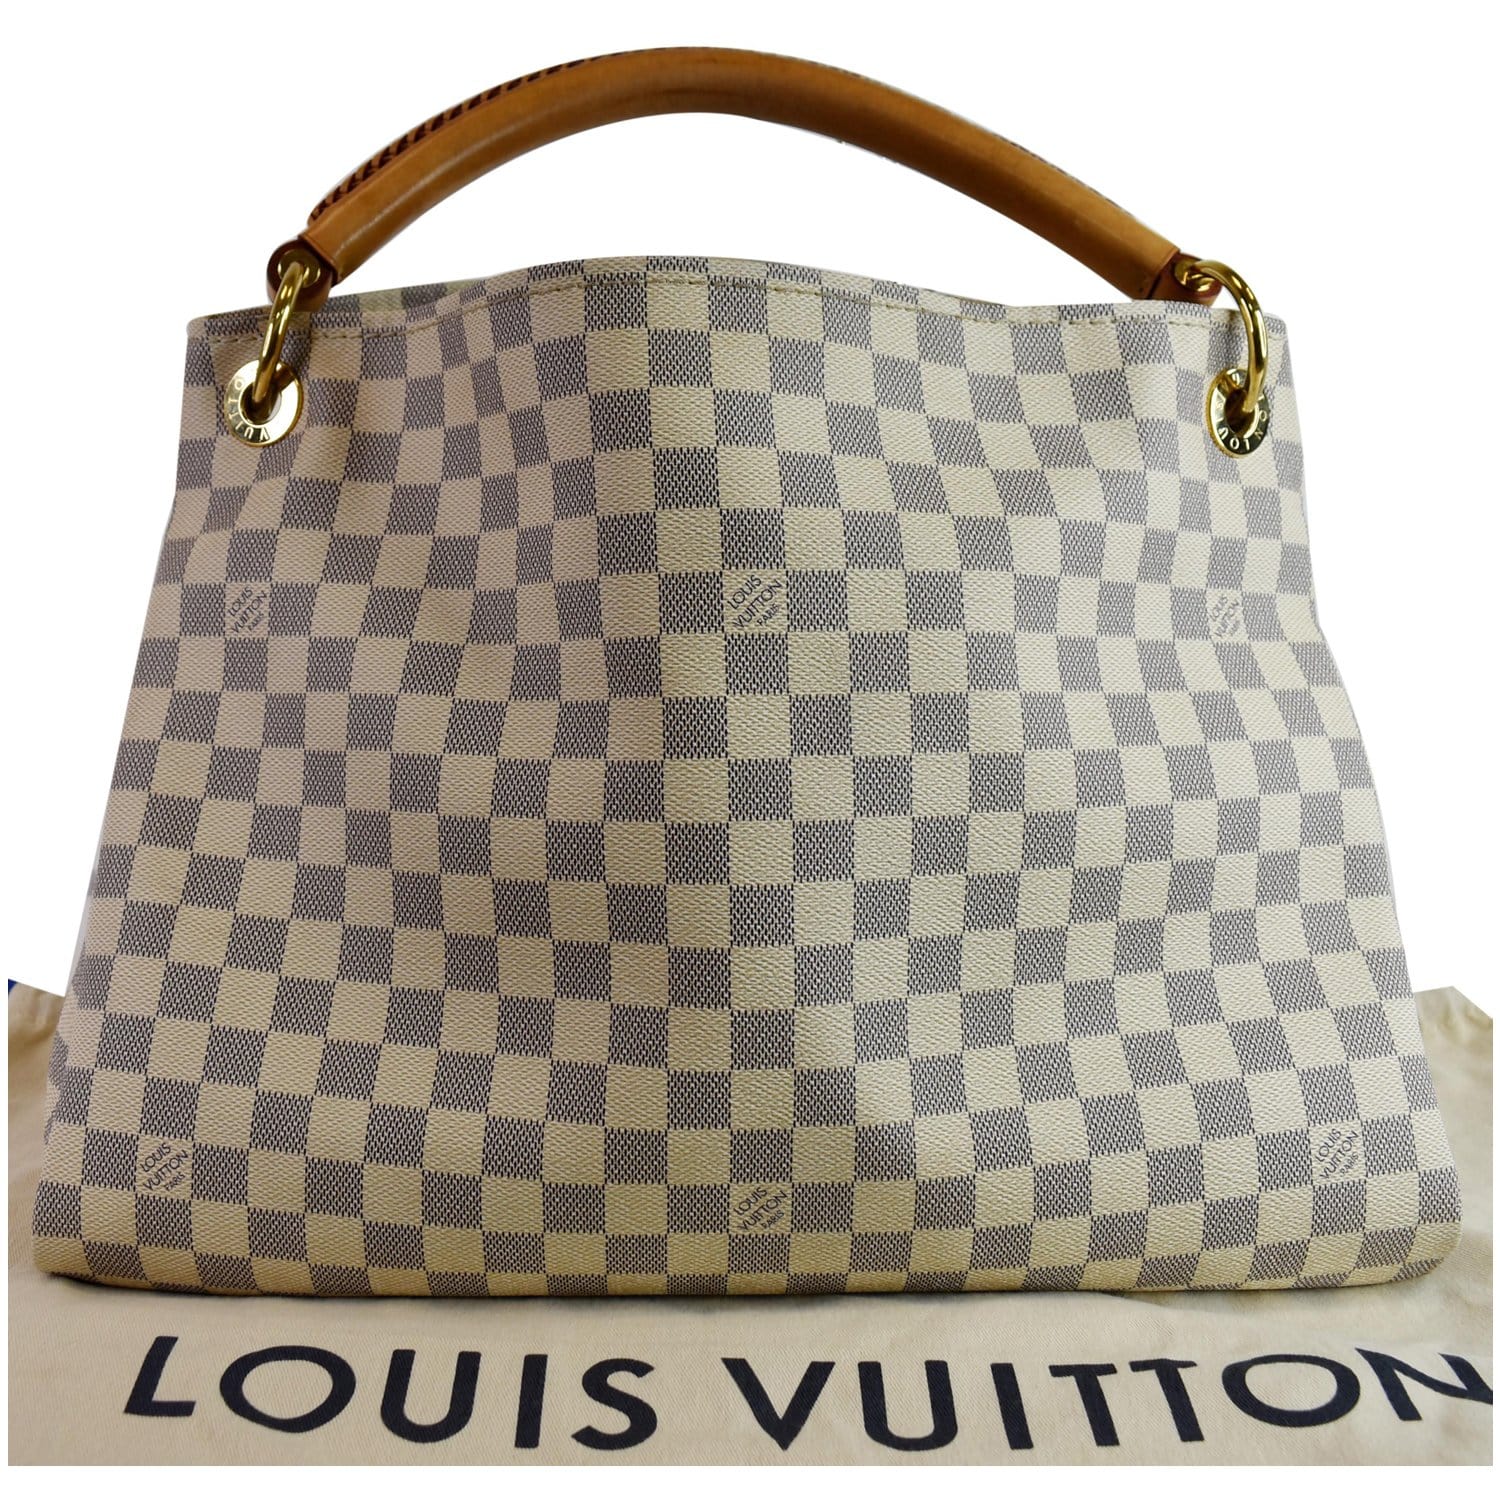 LOUIS VUITTON ARTSY MM HAND BAG PURSE DAMIER AZUR N41174 63508 – brand-jfa